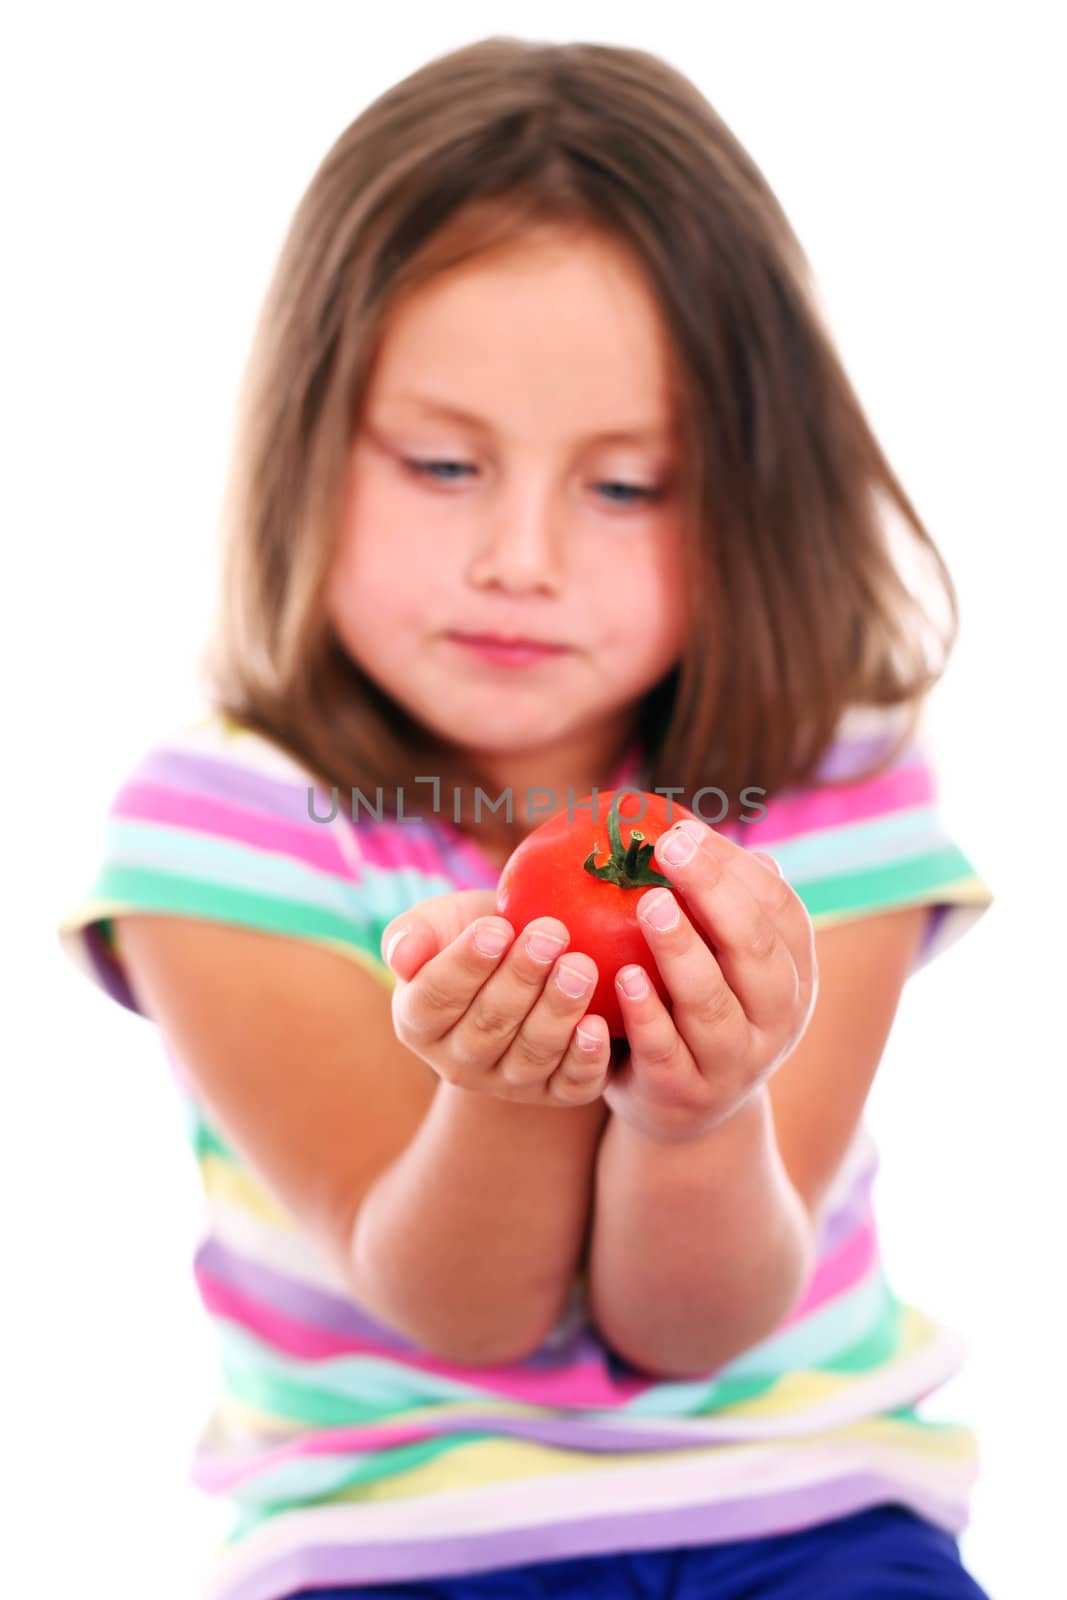 Little girl with tomato by rufatjumali